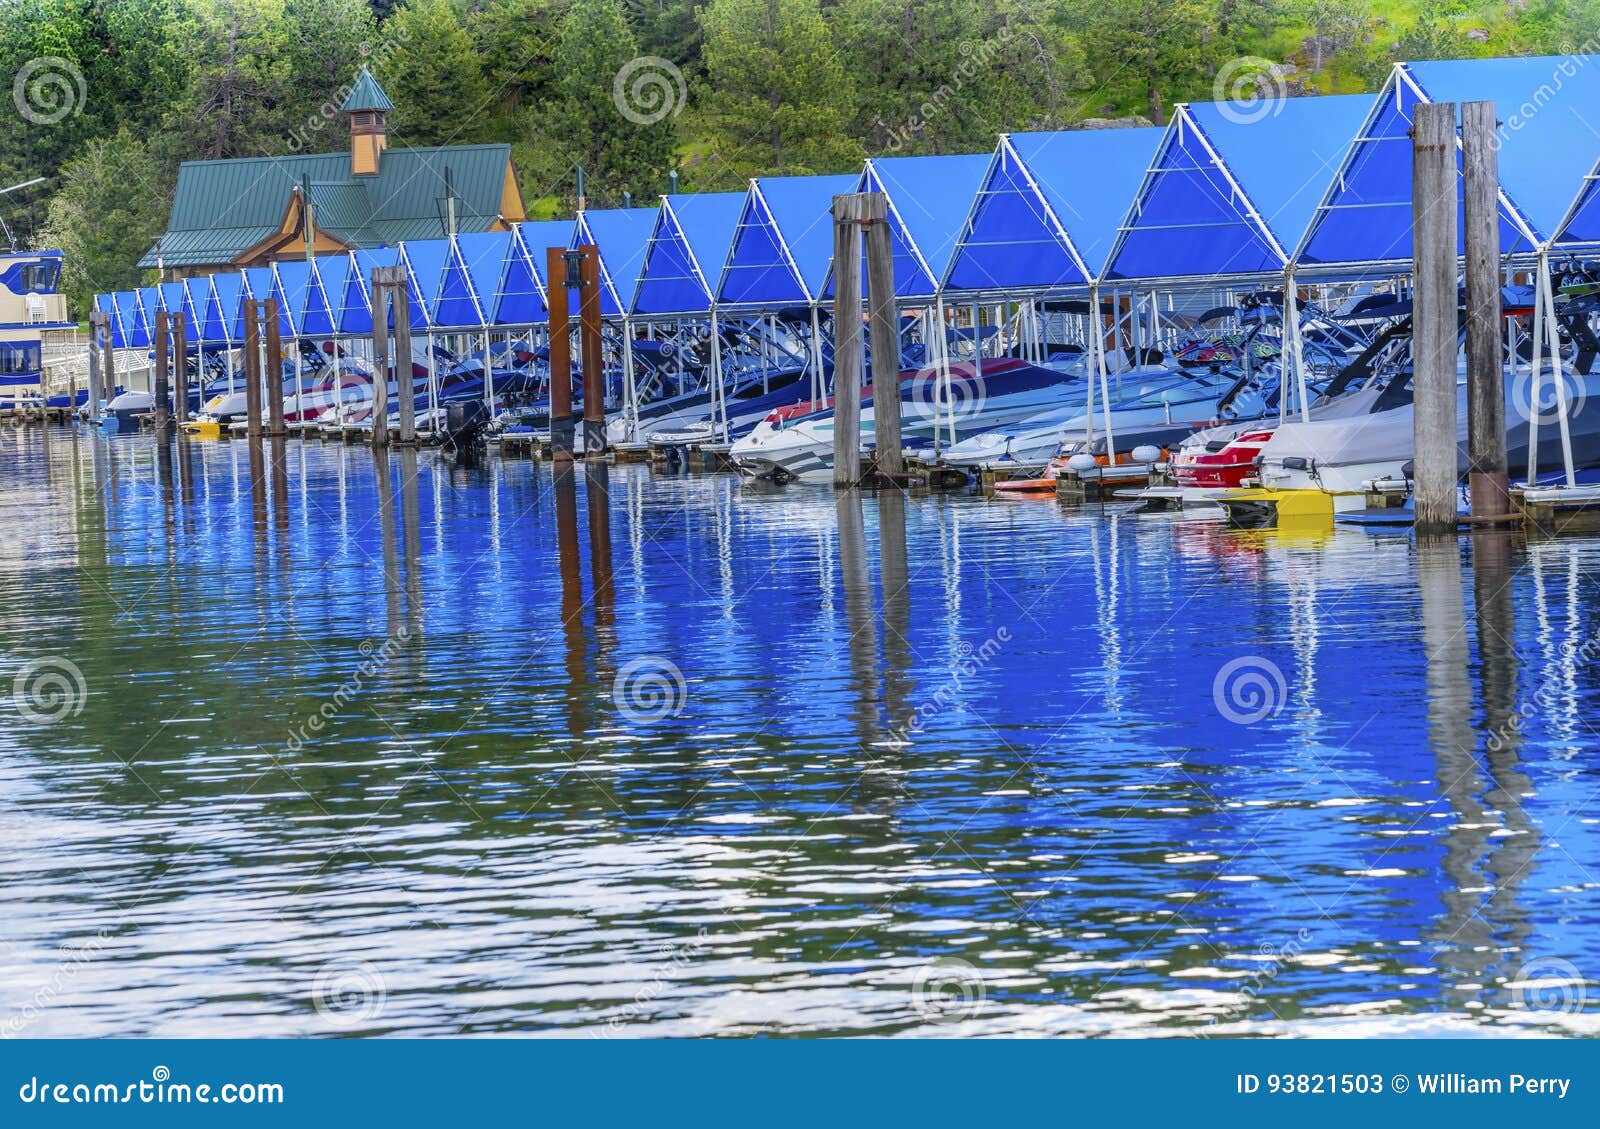 boardwalk marina piers boats reflection lake coeur d`alene idaho